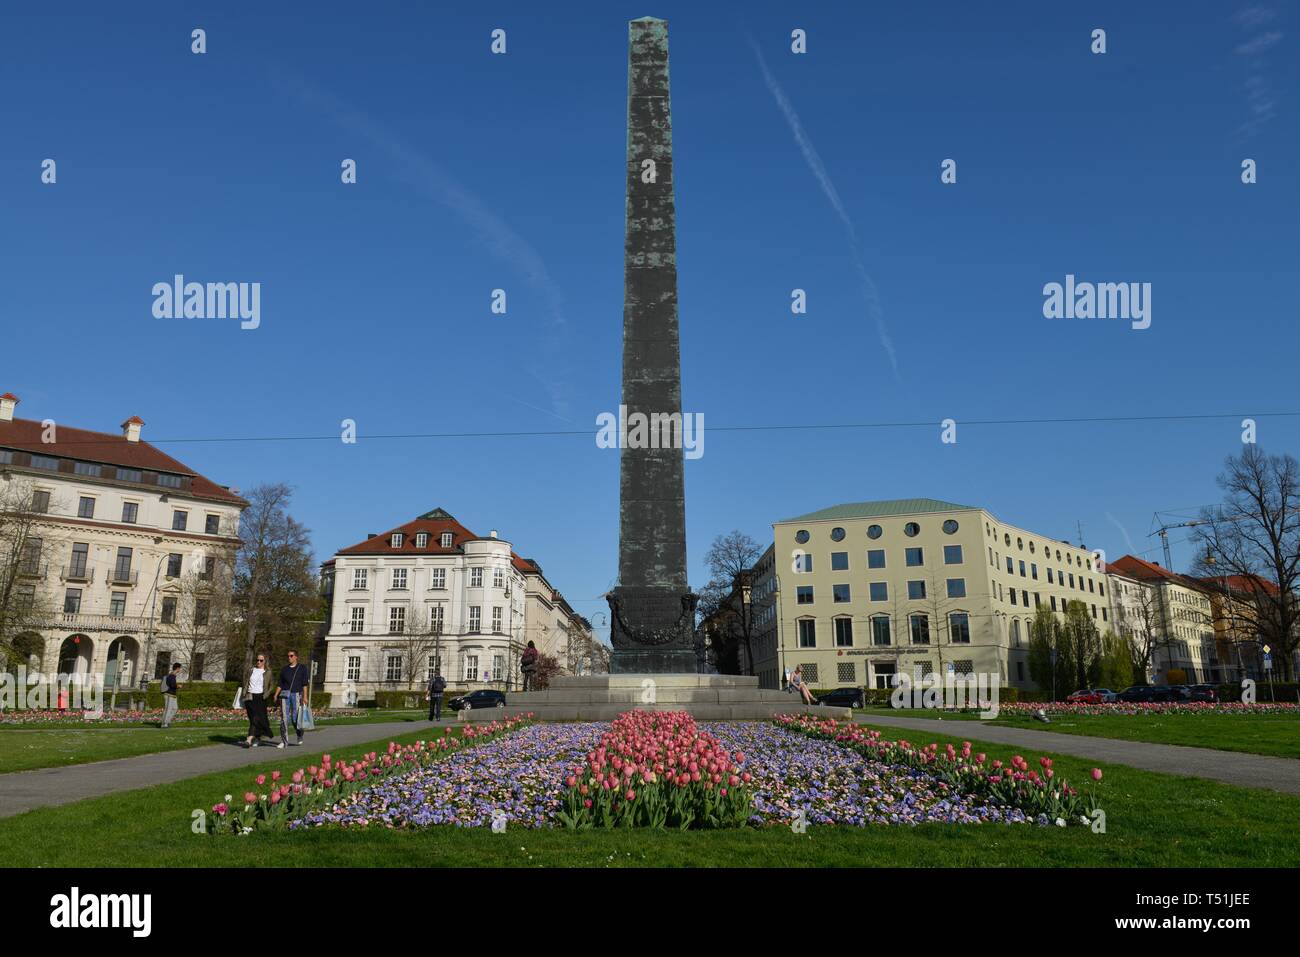 Obelisk with flower beds in front of houses roundabout, Karolinenplatz, Munich, Bavaria, Germany Stock Photo